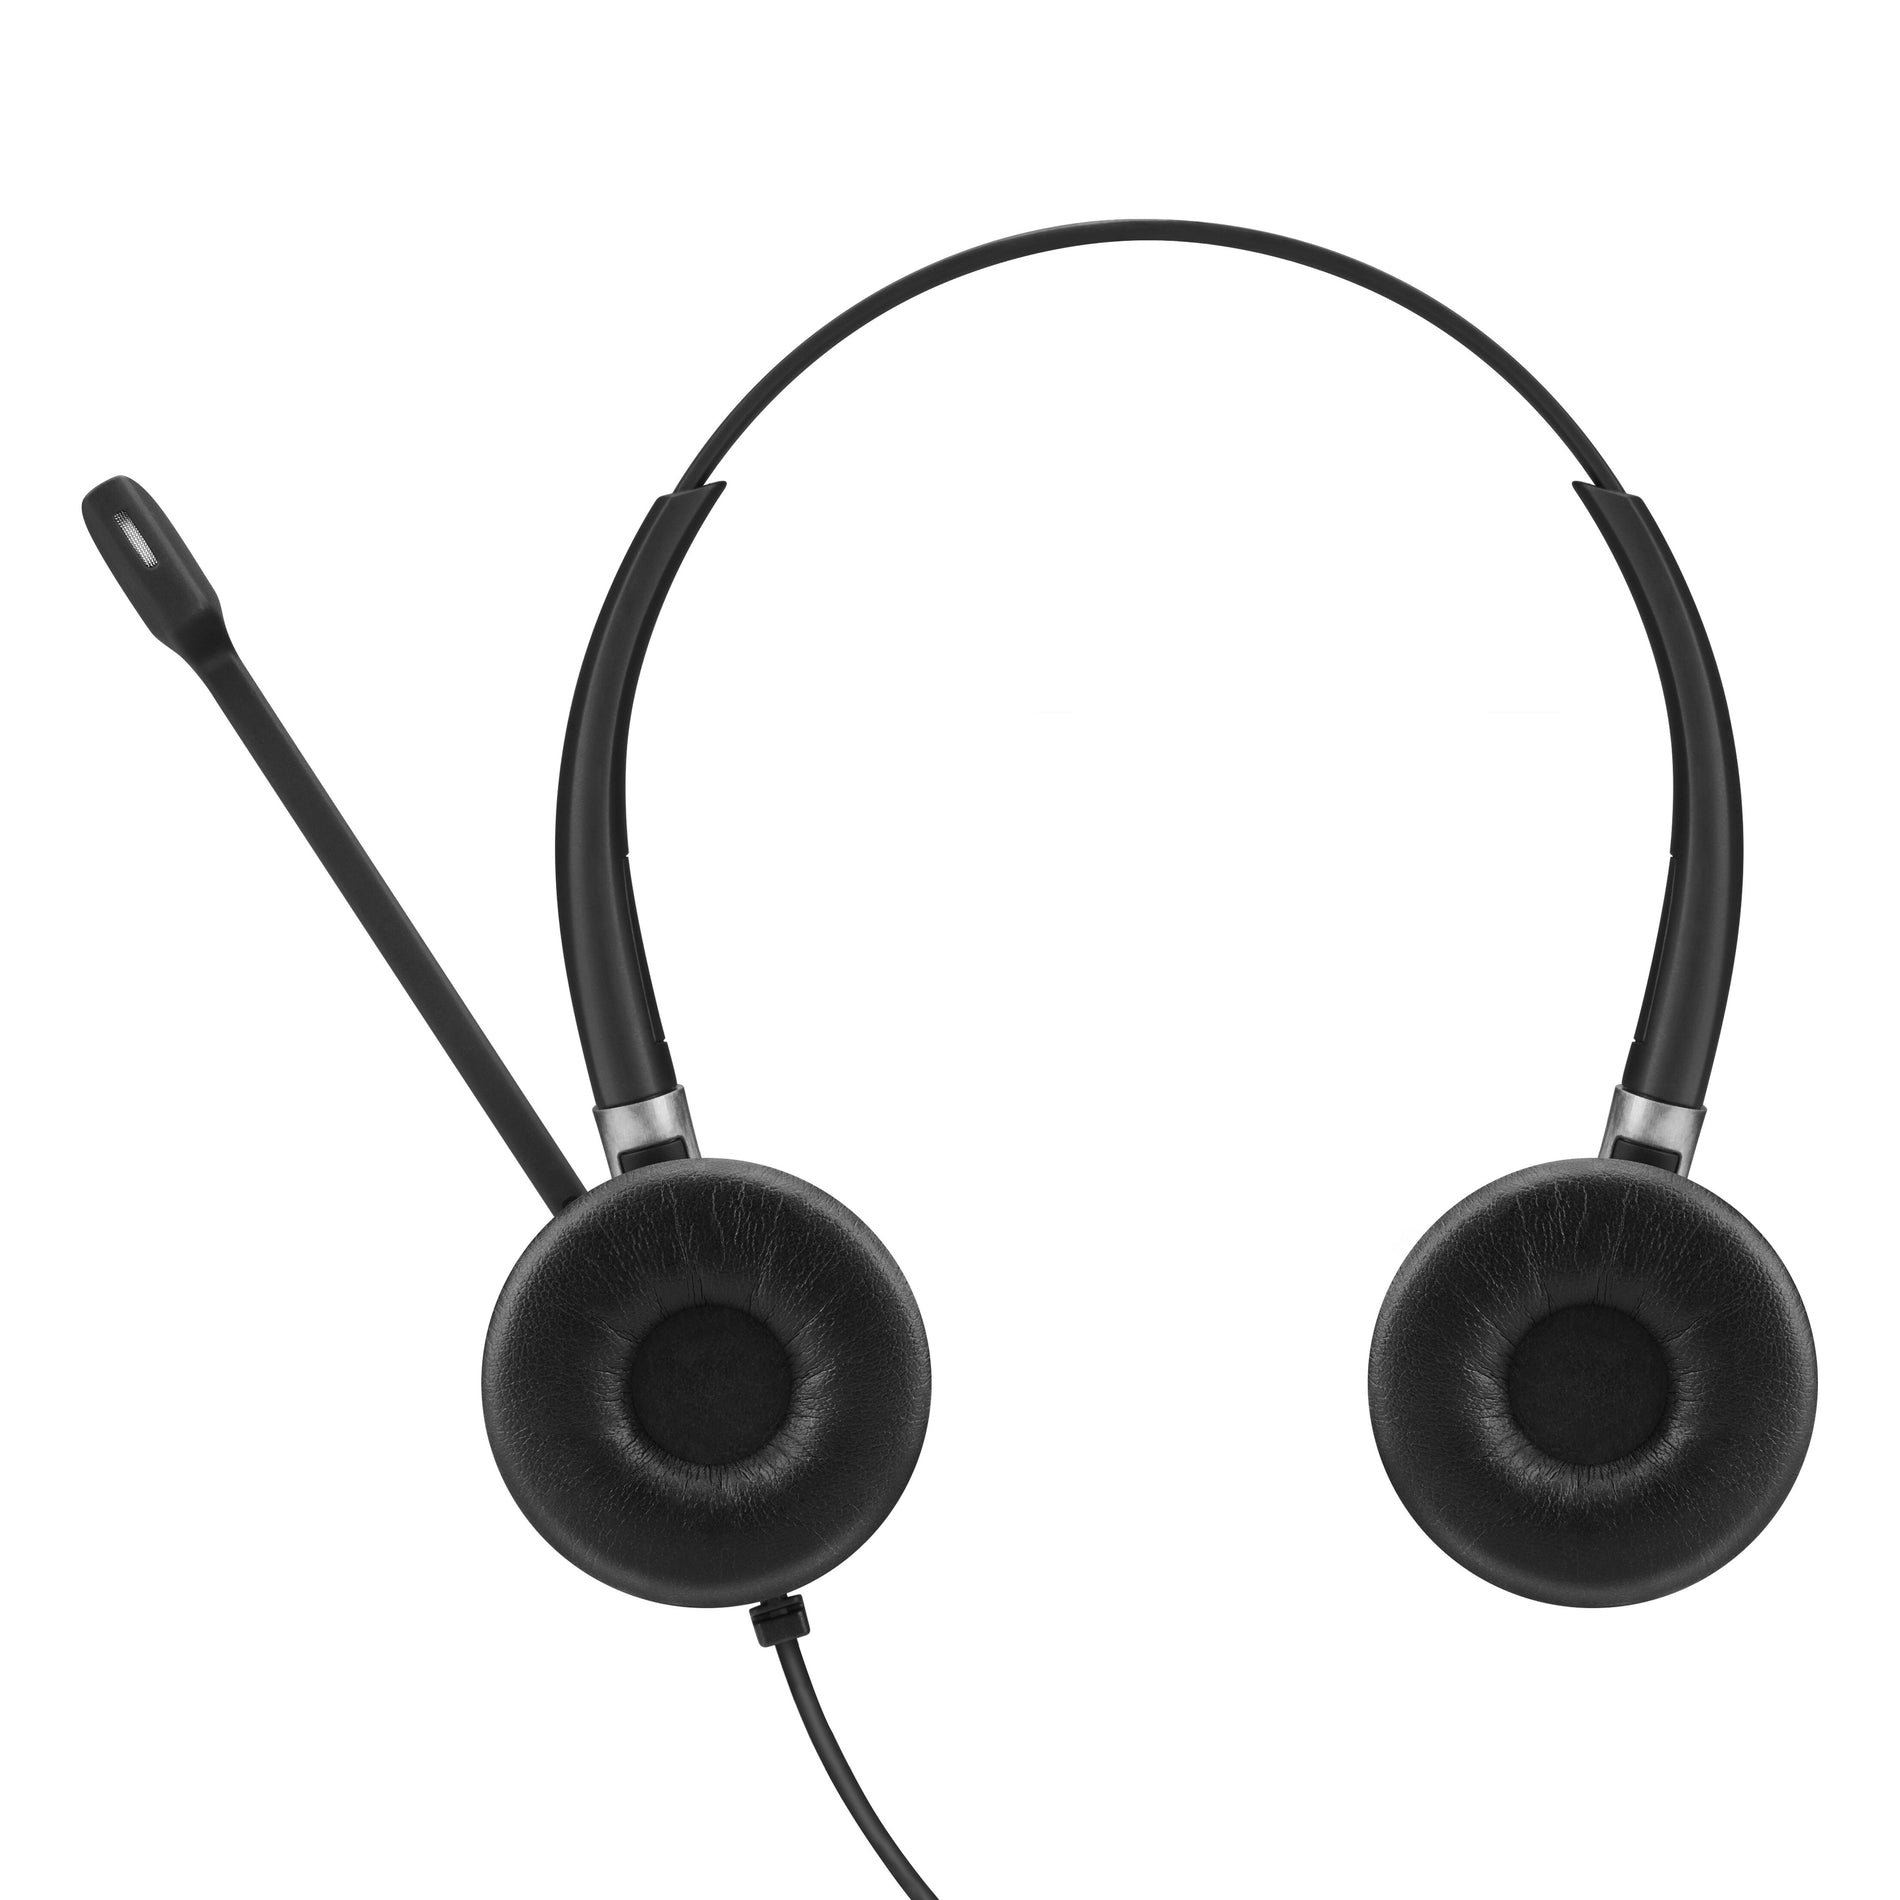 EPOS | SENNHEISER IMPACT SC 665 On-ear Headset [Discontinued]